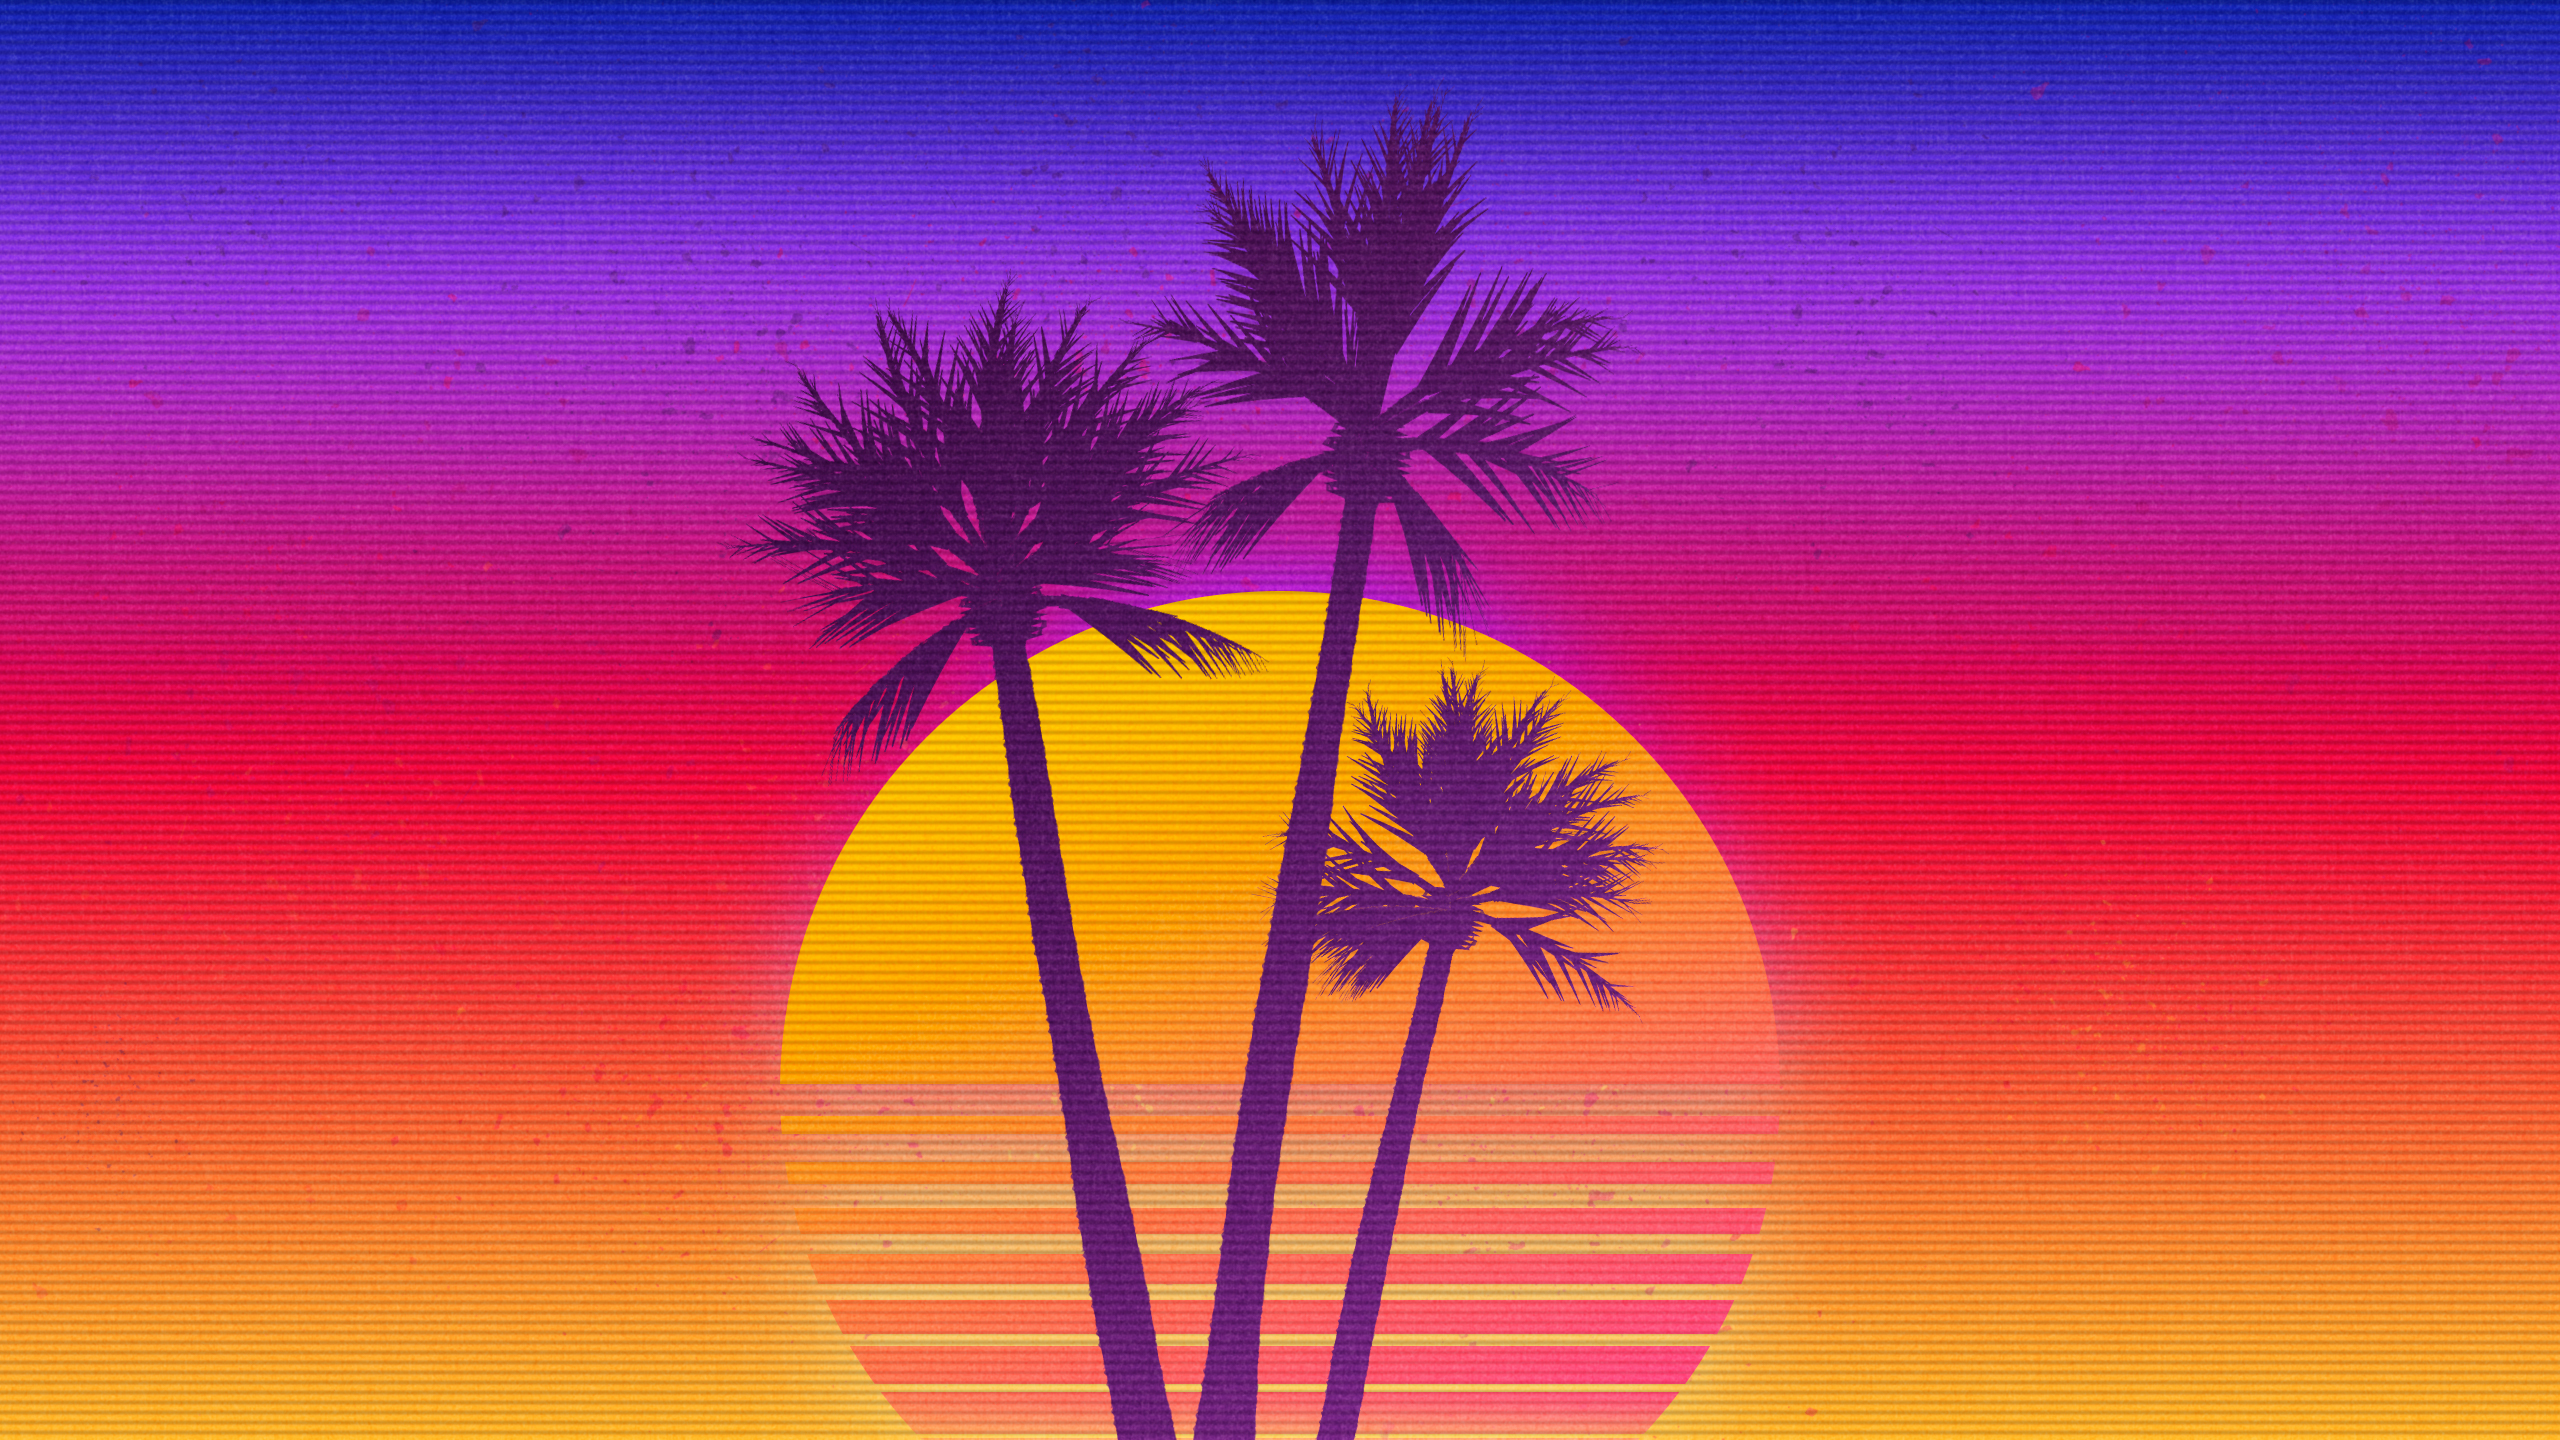 Wallpaper, synthwave, OutRun, vaporwave, Retrowave, sunset, palm trees, digital art 2560x1440